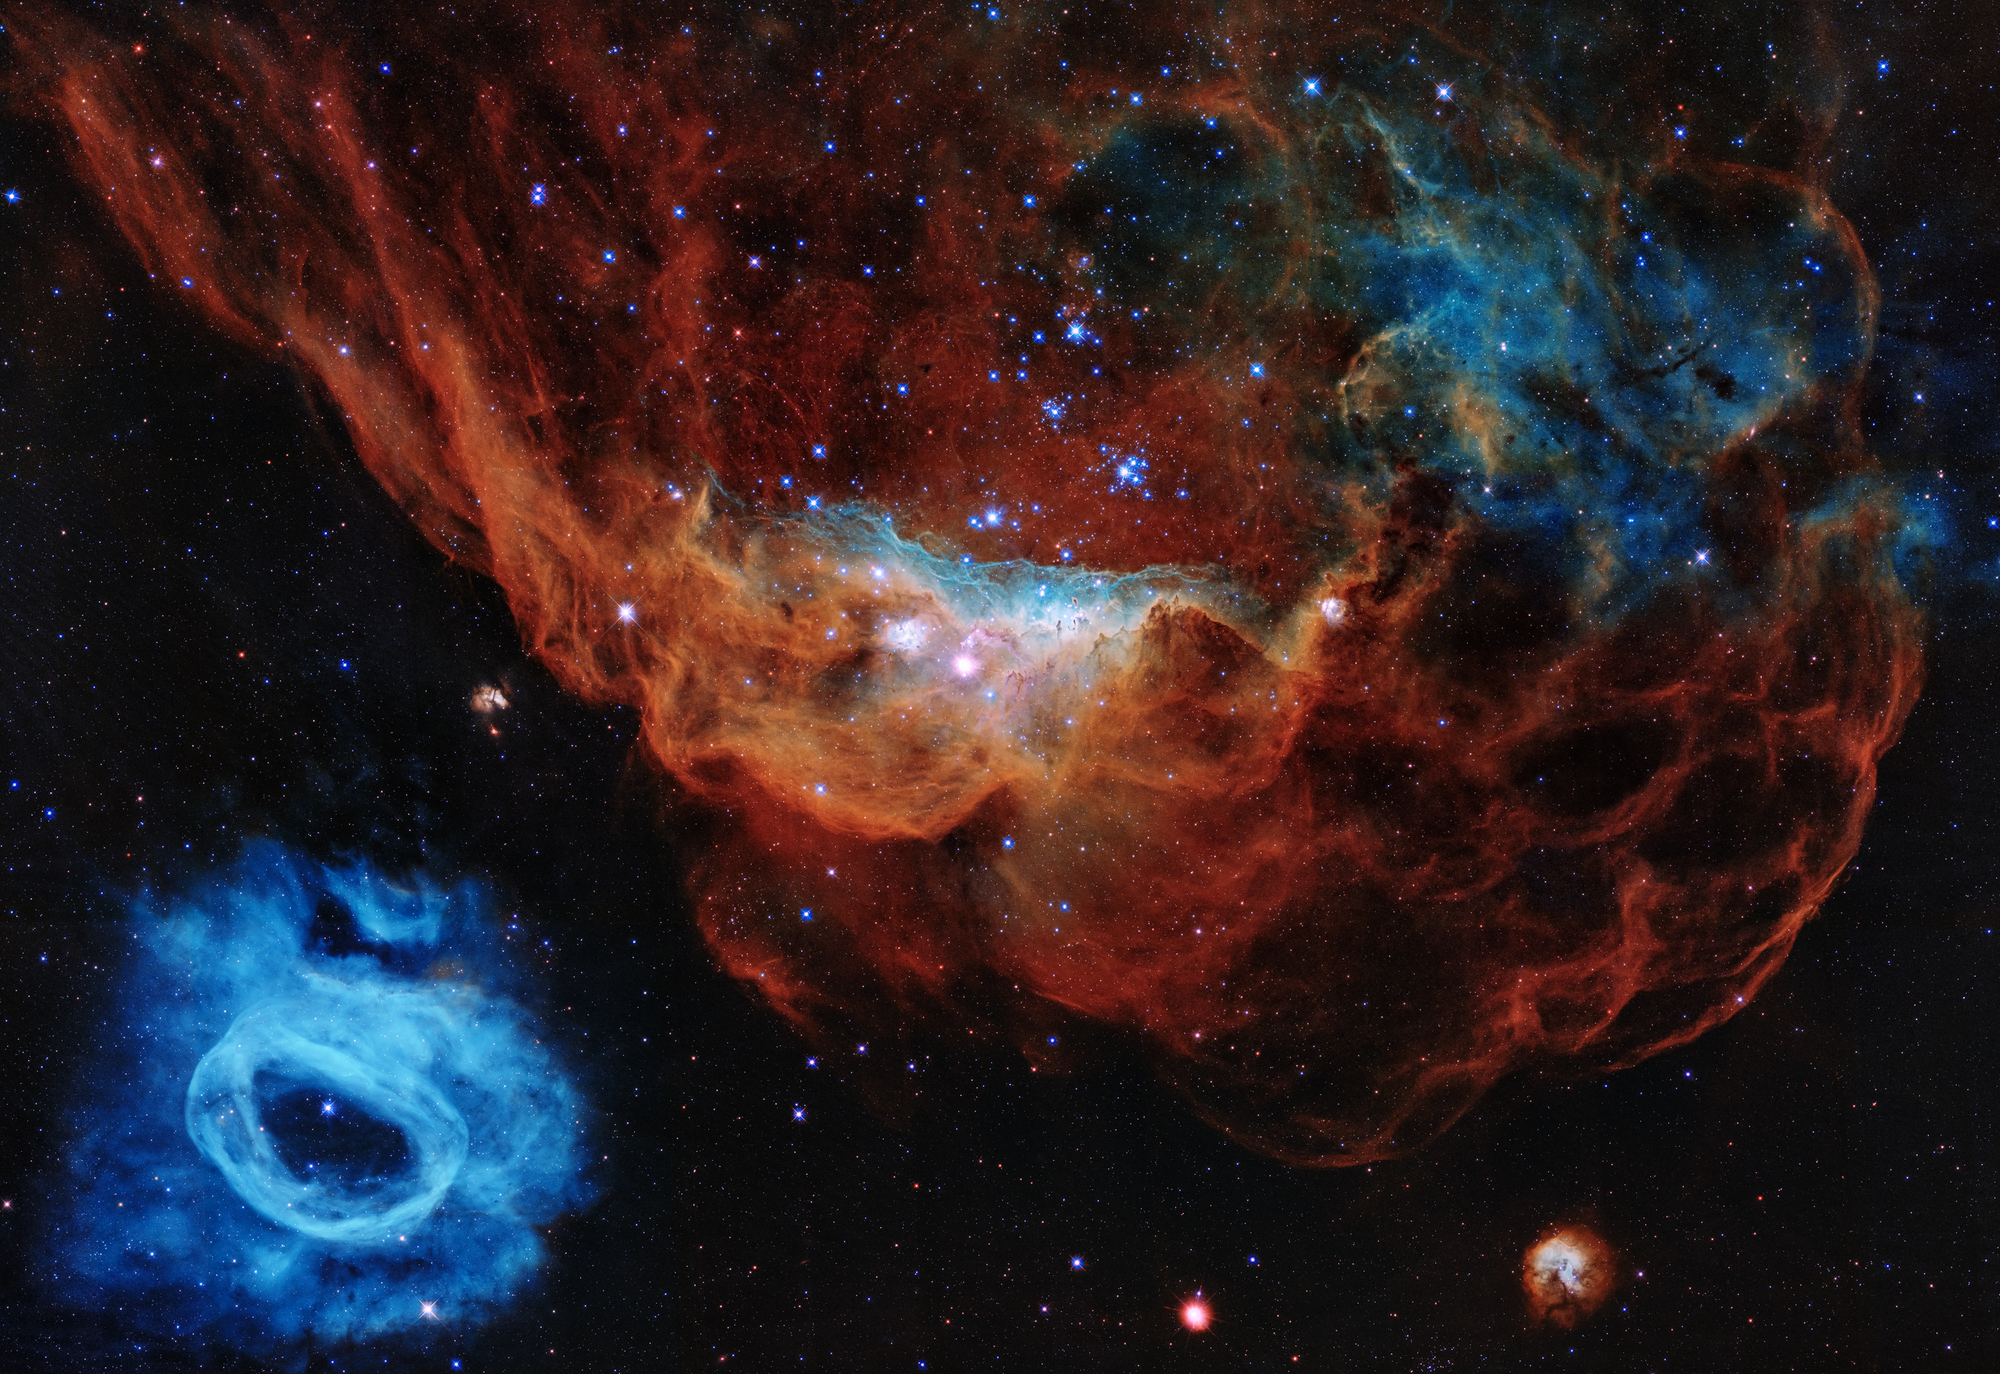 Hubble Views Cosmic Cloud CB 130-3 - SpaceRef